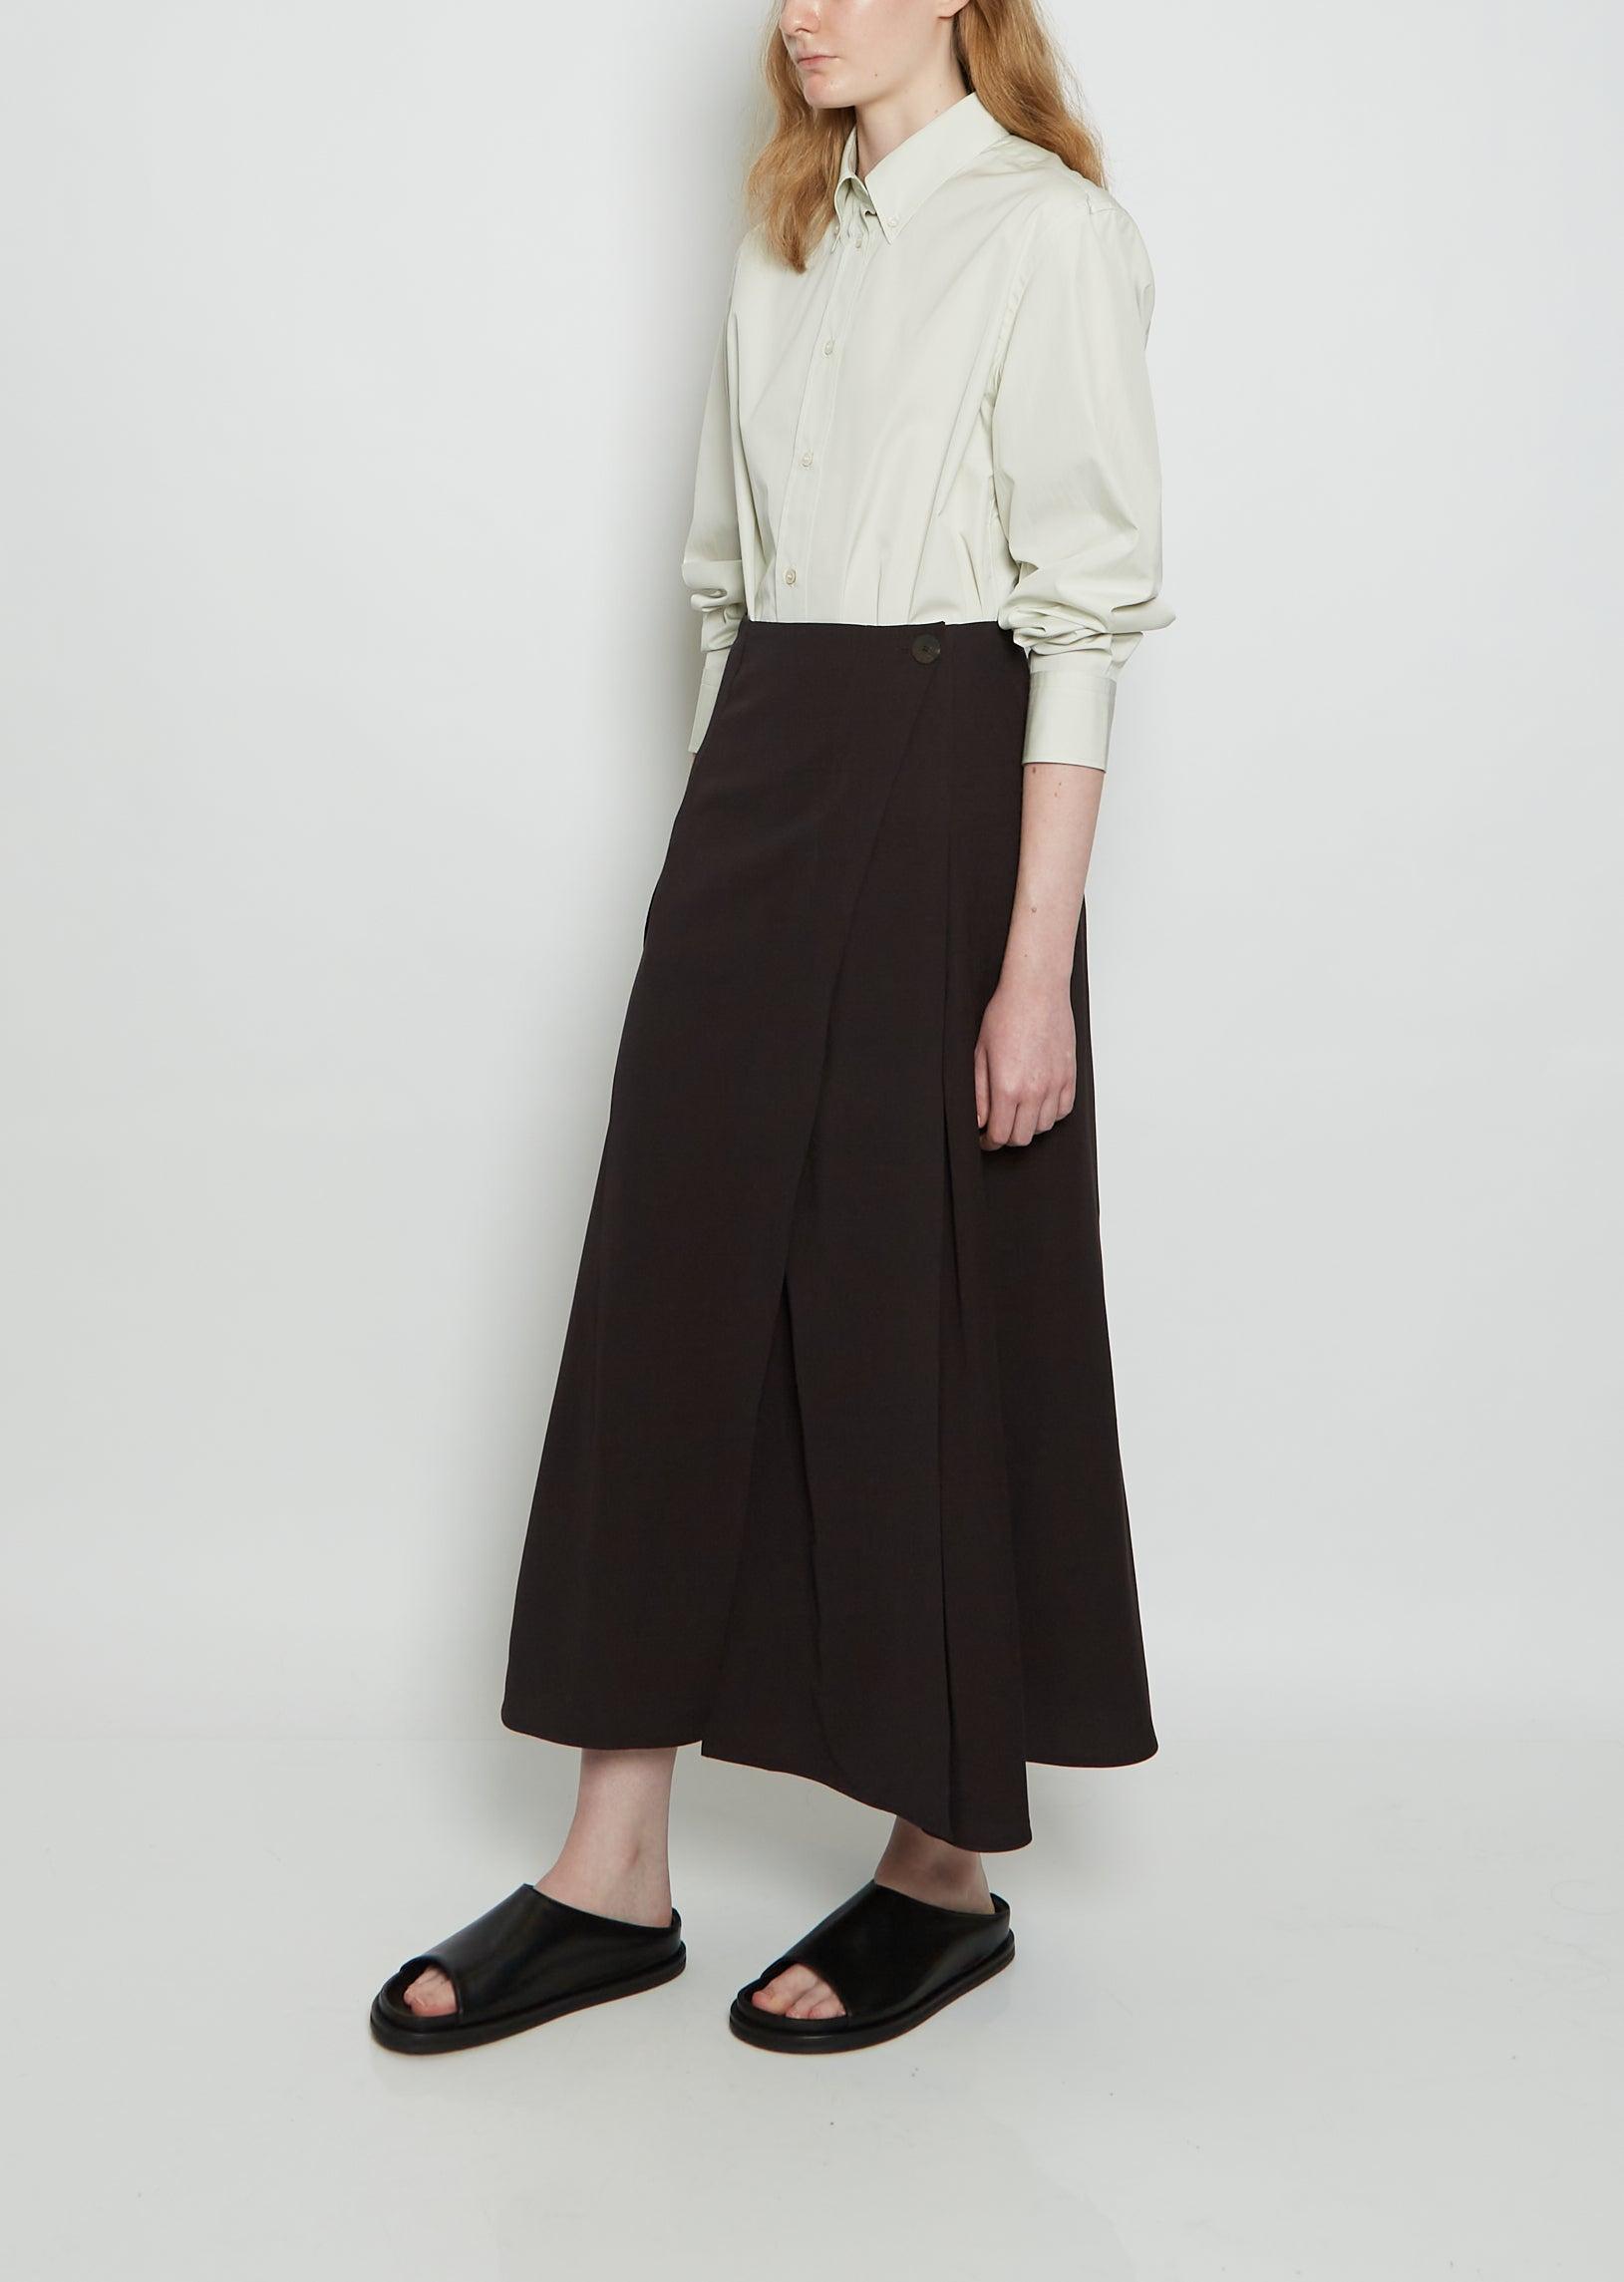 Studio Nicholson Kudo Tropical Wool Wrap Skirt in Black | Lyst